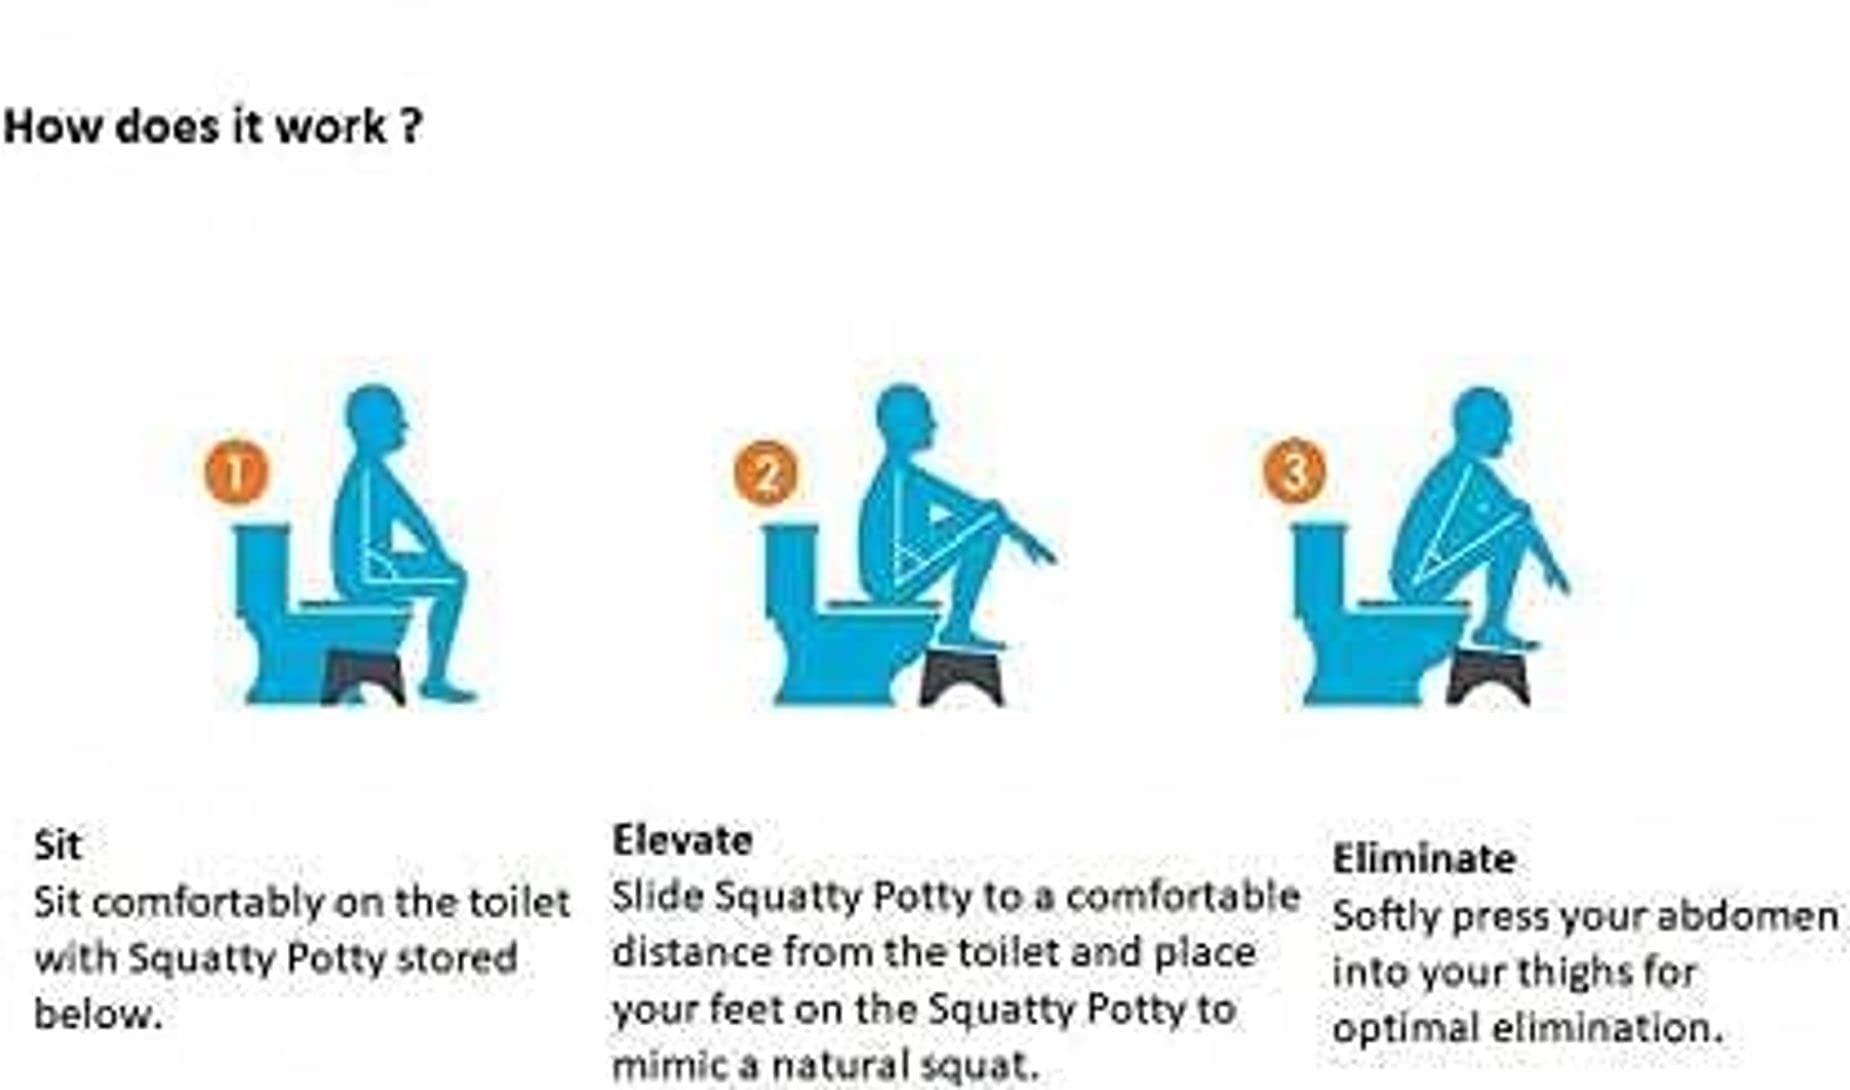 VIO Perfect Posture Plastic Squat Potty Step Stool for Western Toilet Scientific Angle, Anti-Slip, Anti-Constipation, 21 cm Height (White)